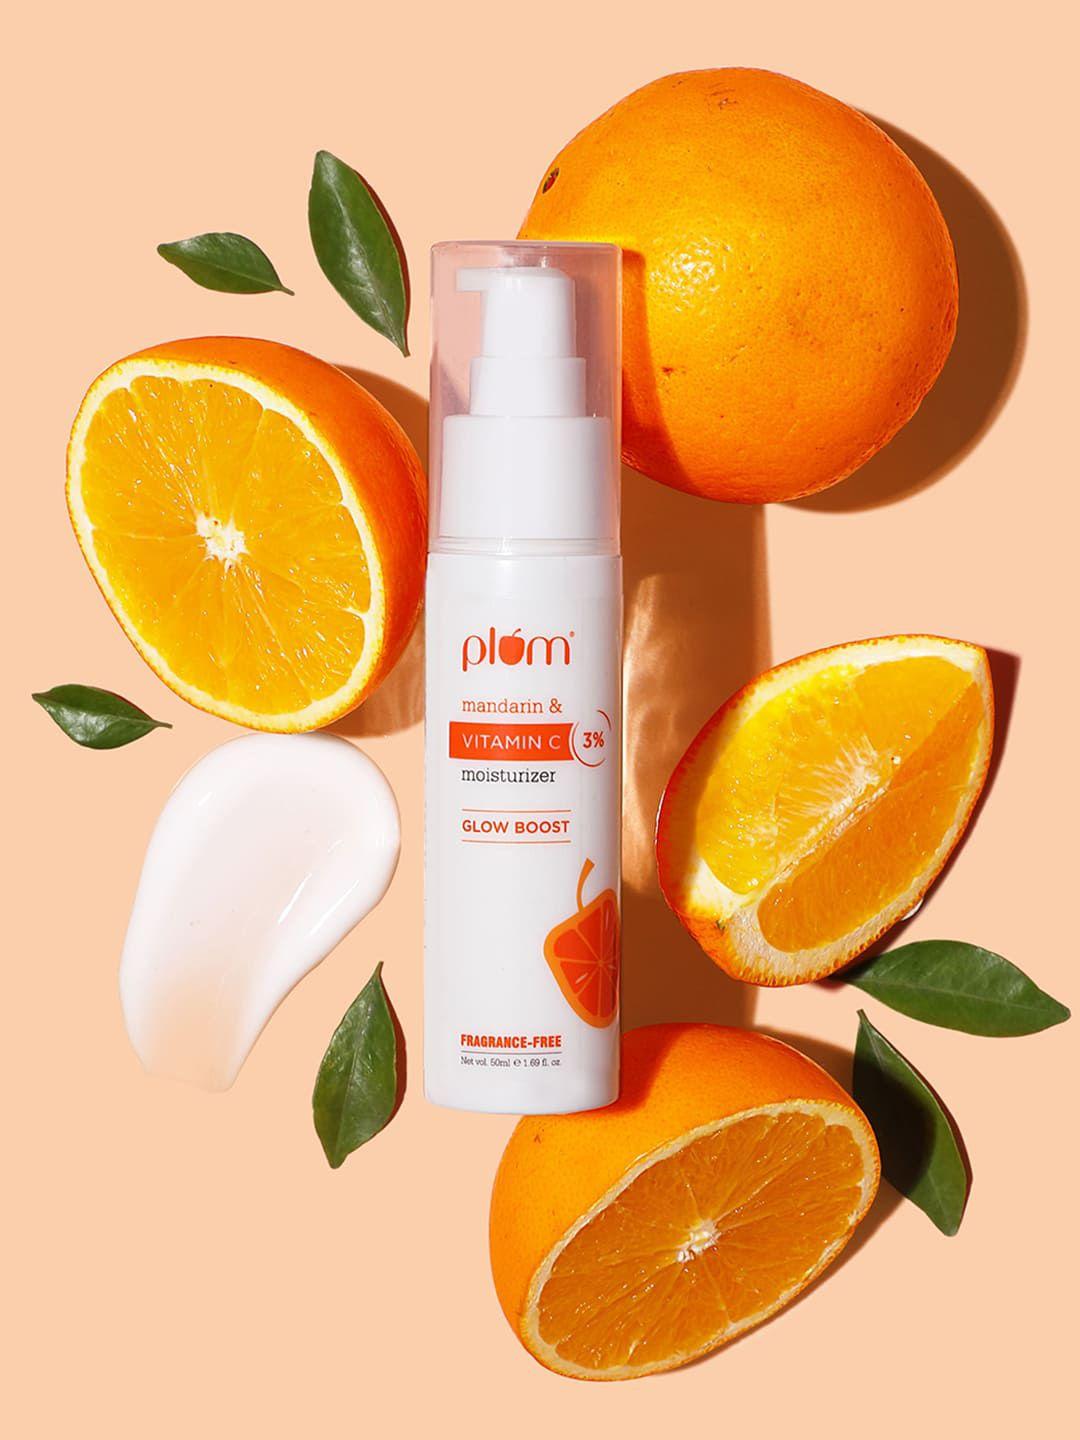 plum 3% vitamin c moisturizer with mandarin for hyperpigmentation & dull skin - 50ml